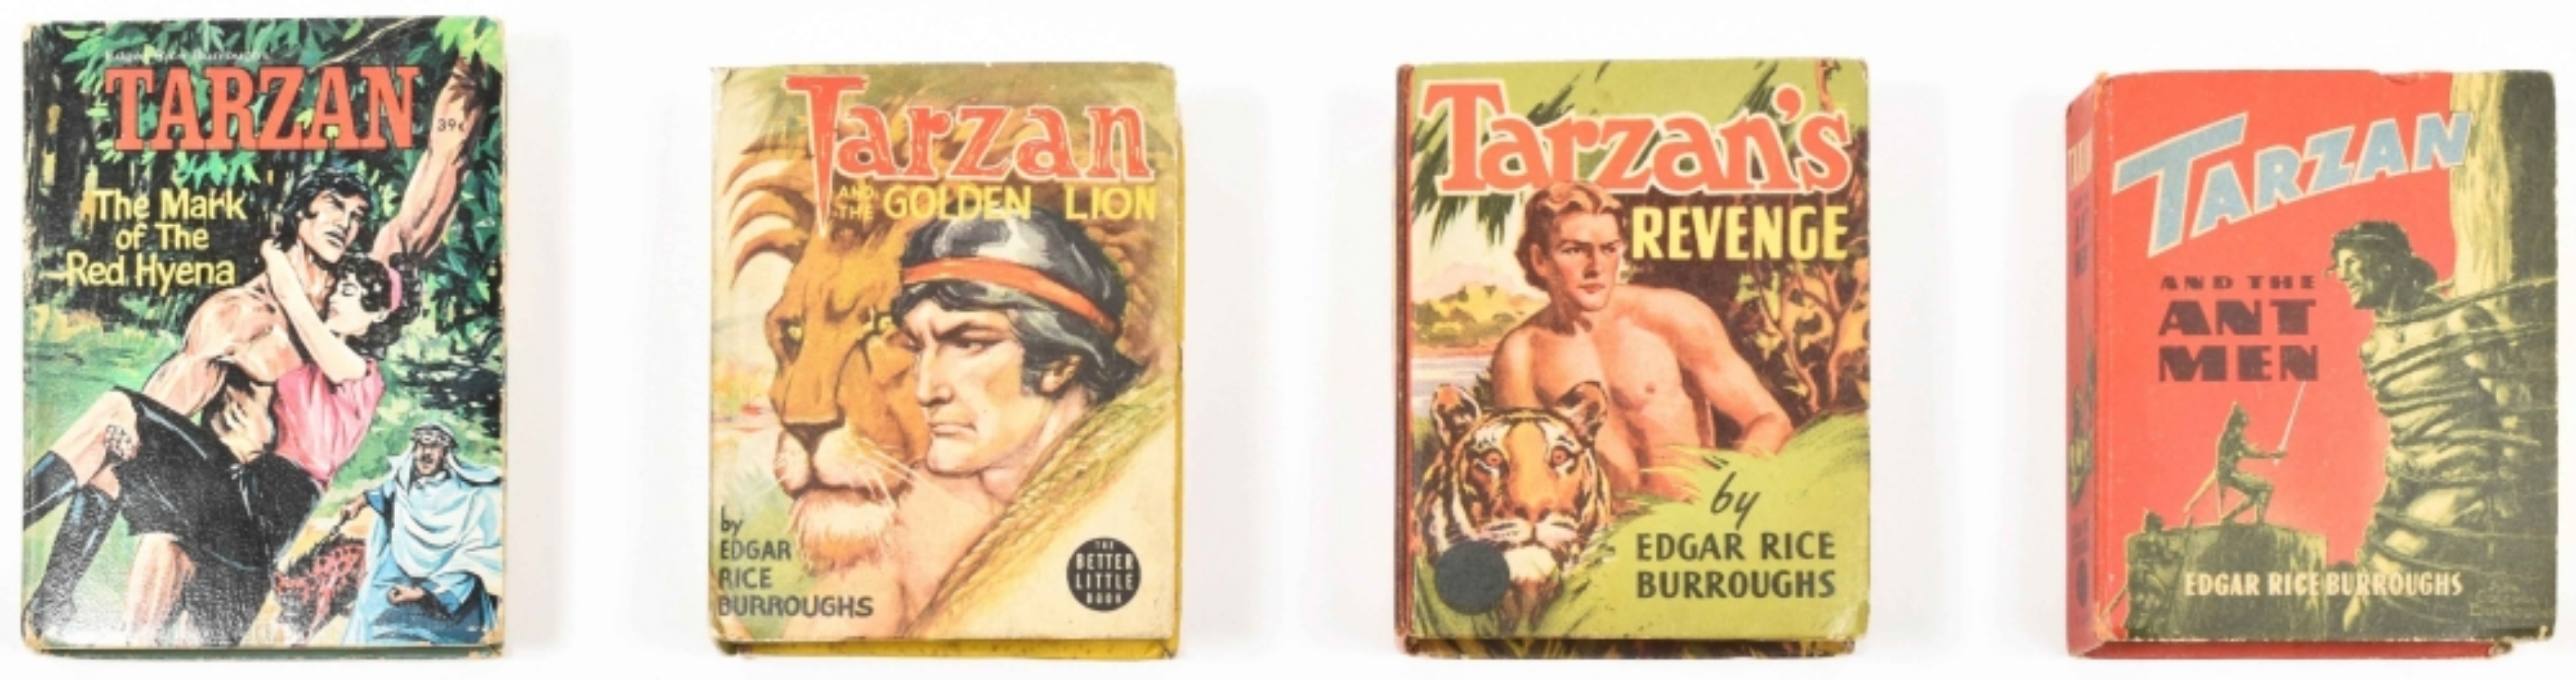 Tarzan and the Ant Men  - Image 2 of 6